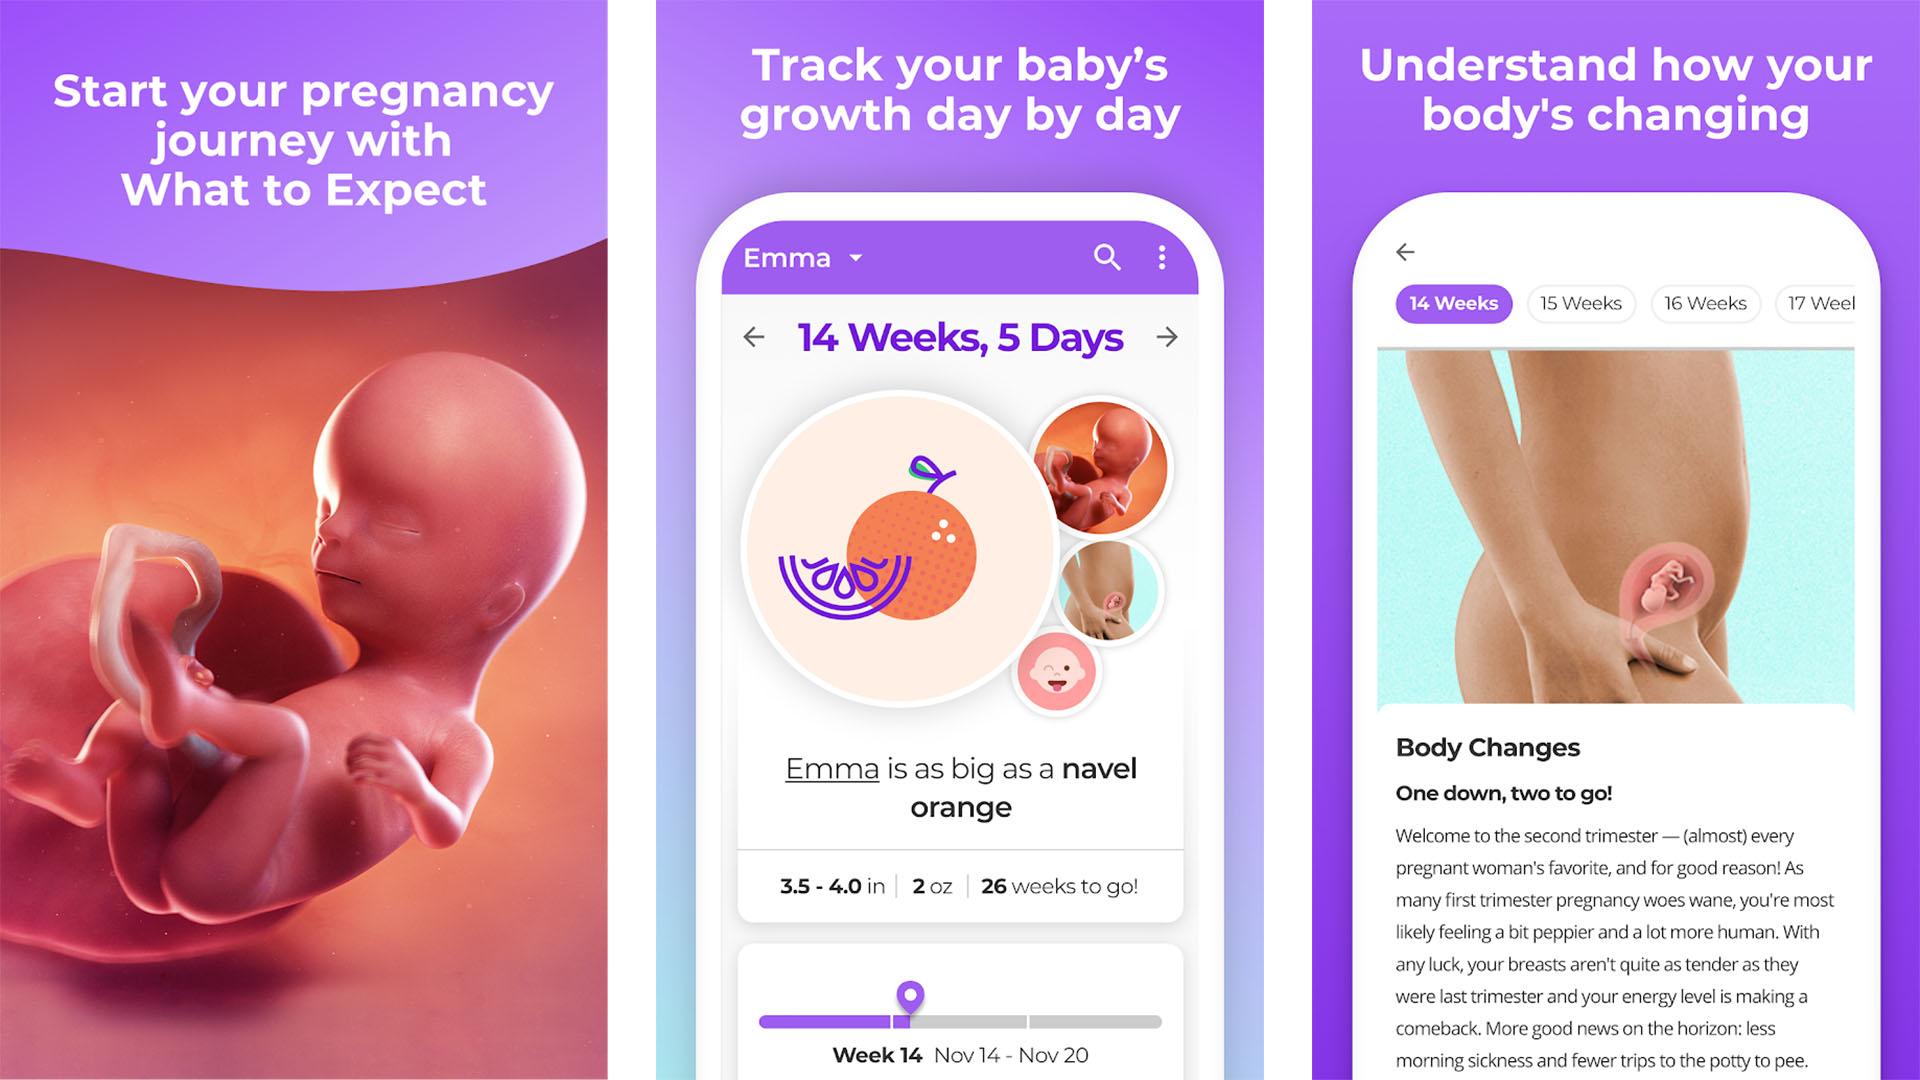 Pregnancy and Baby Tracker screenshot 2021